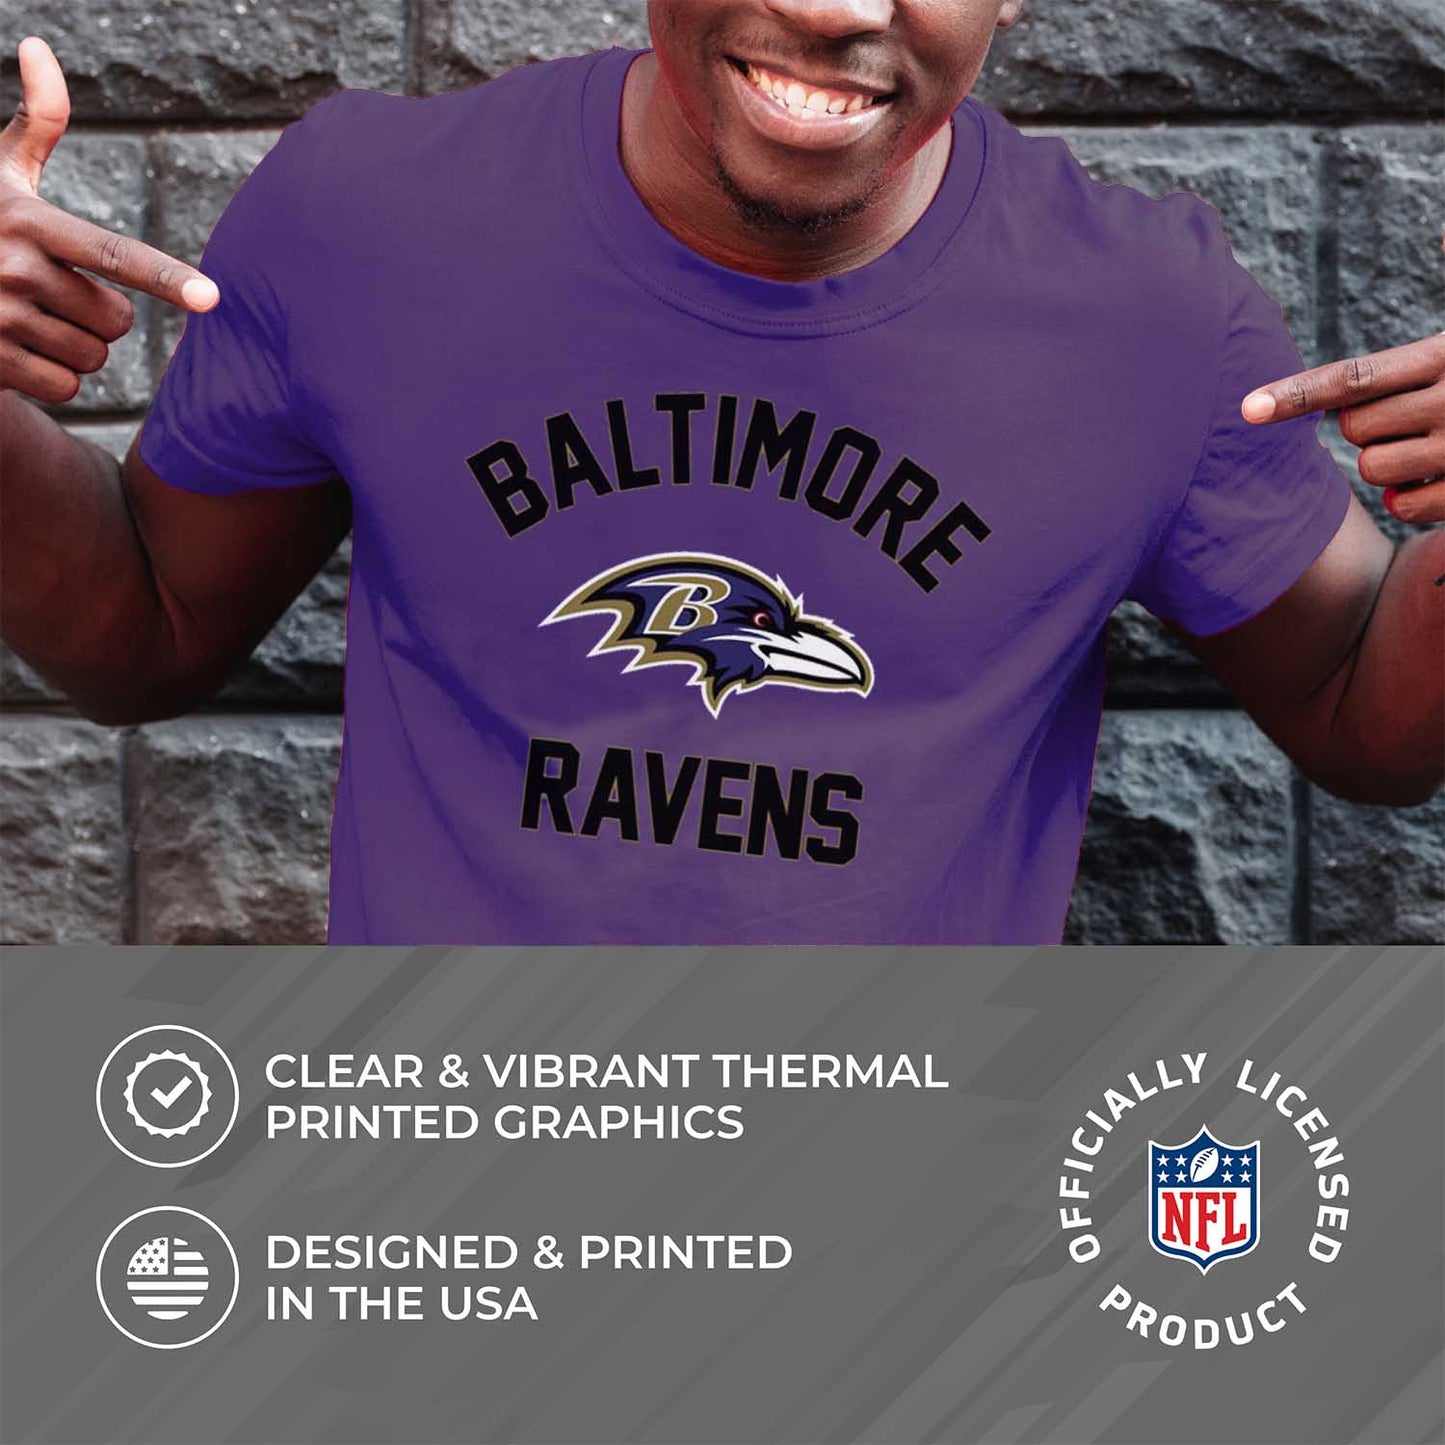 Baltimore Ravens NFL Adult Gameday T-Shirt - Purple